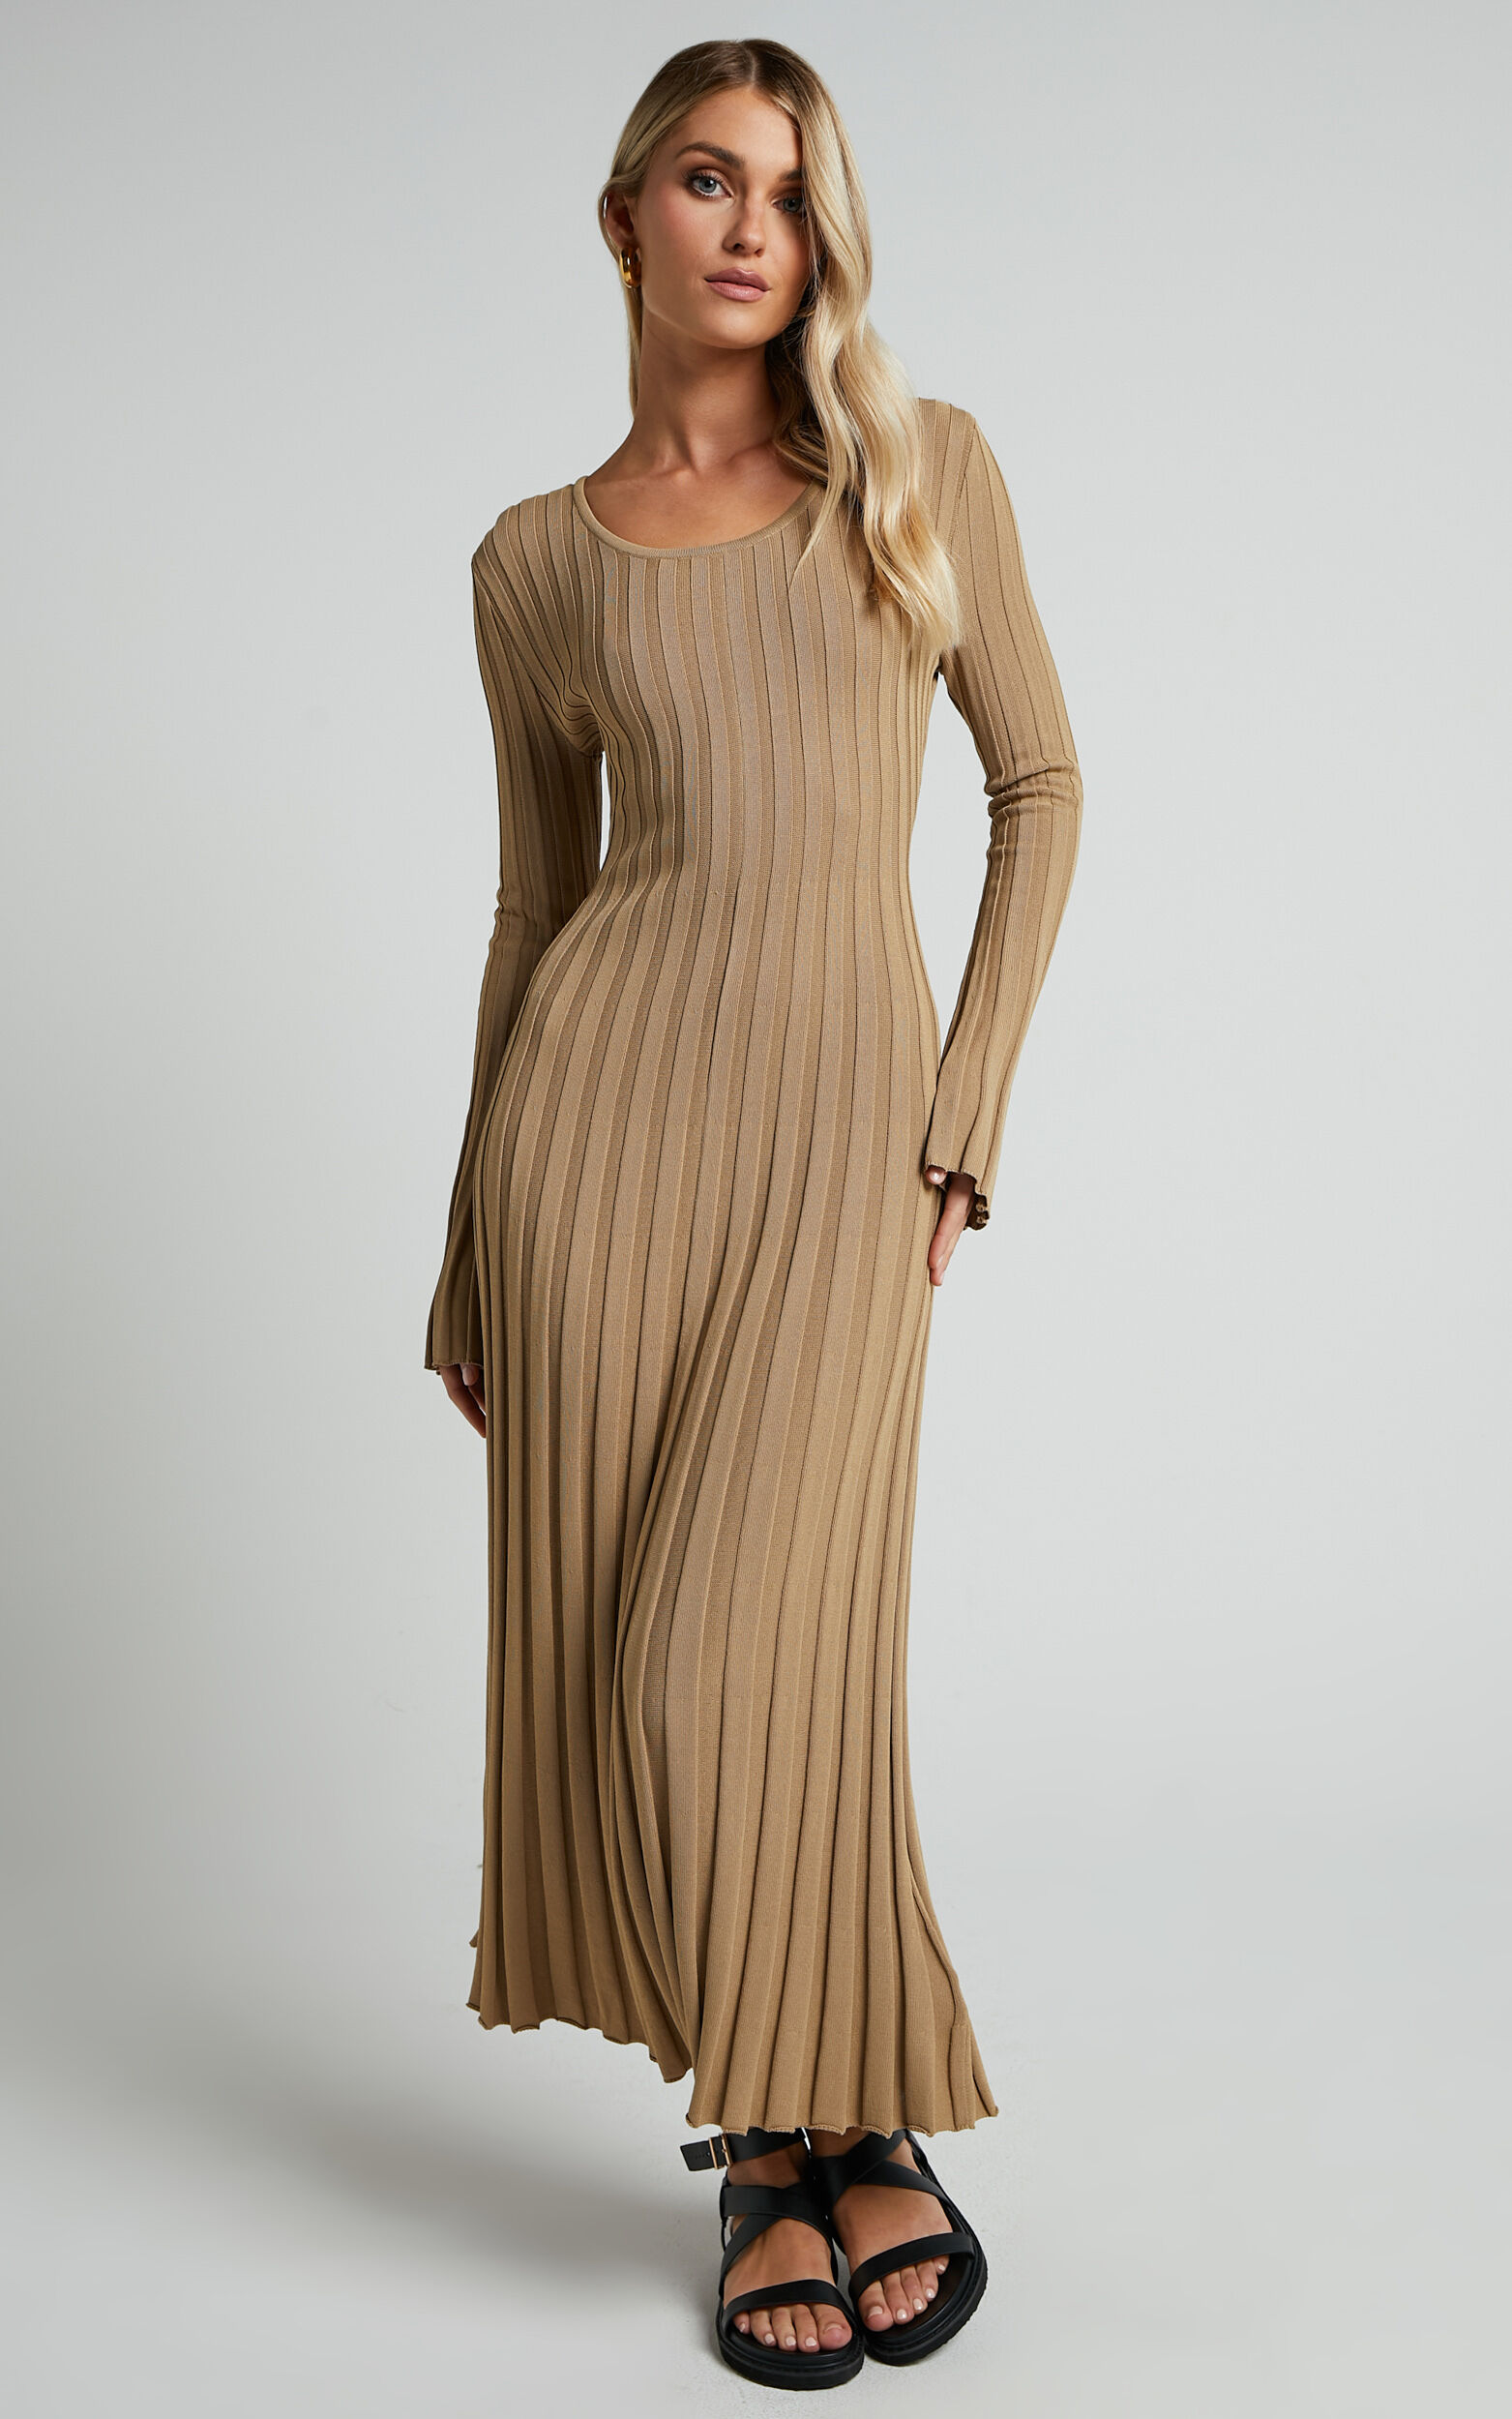 Blaire Midi Dress - Long Sleeve Tie Back Flare Dress in Roasted Cashew - 06, BRN2